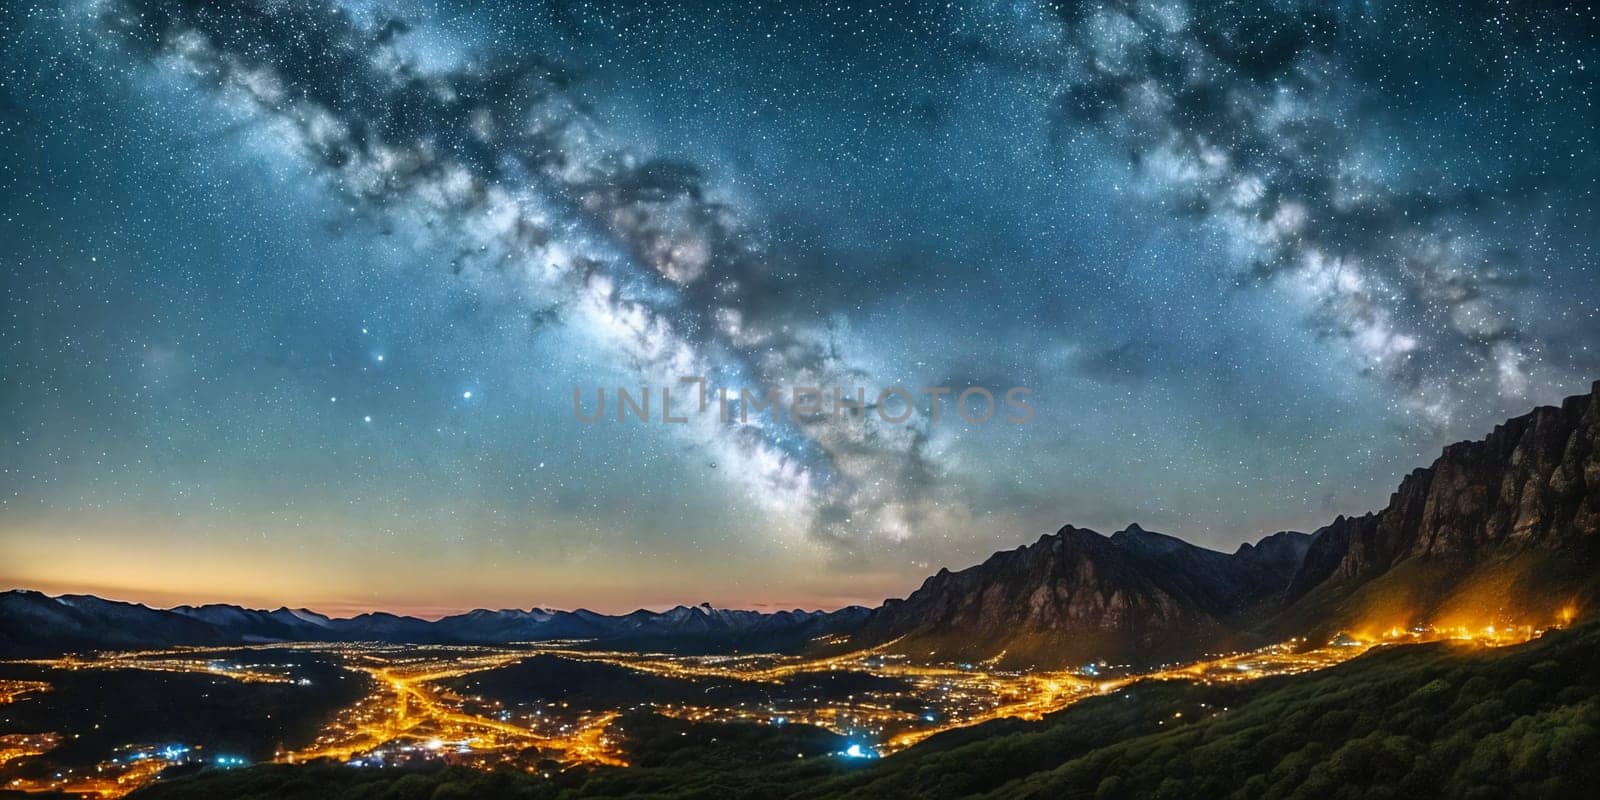 Awe-inspiring night skies, including stars, the Milky Way, celestial events like meteor showers by GoodOlga